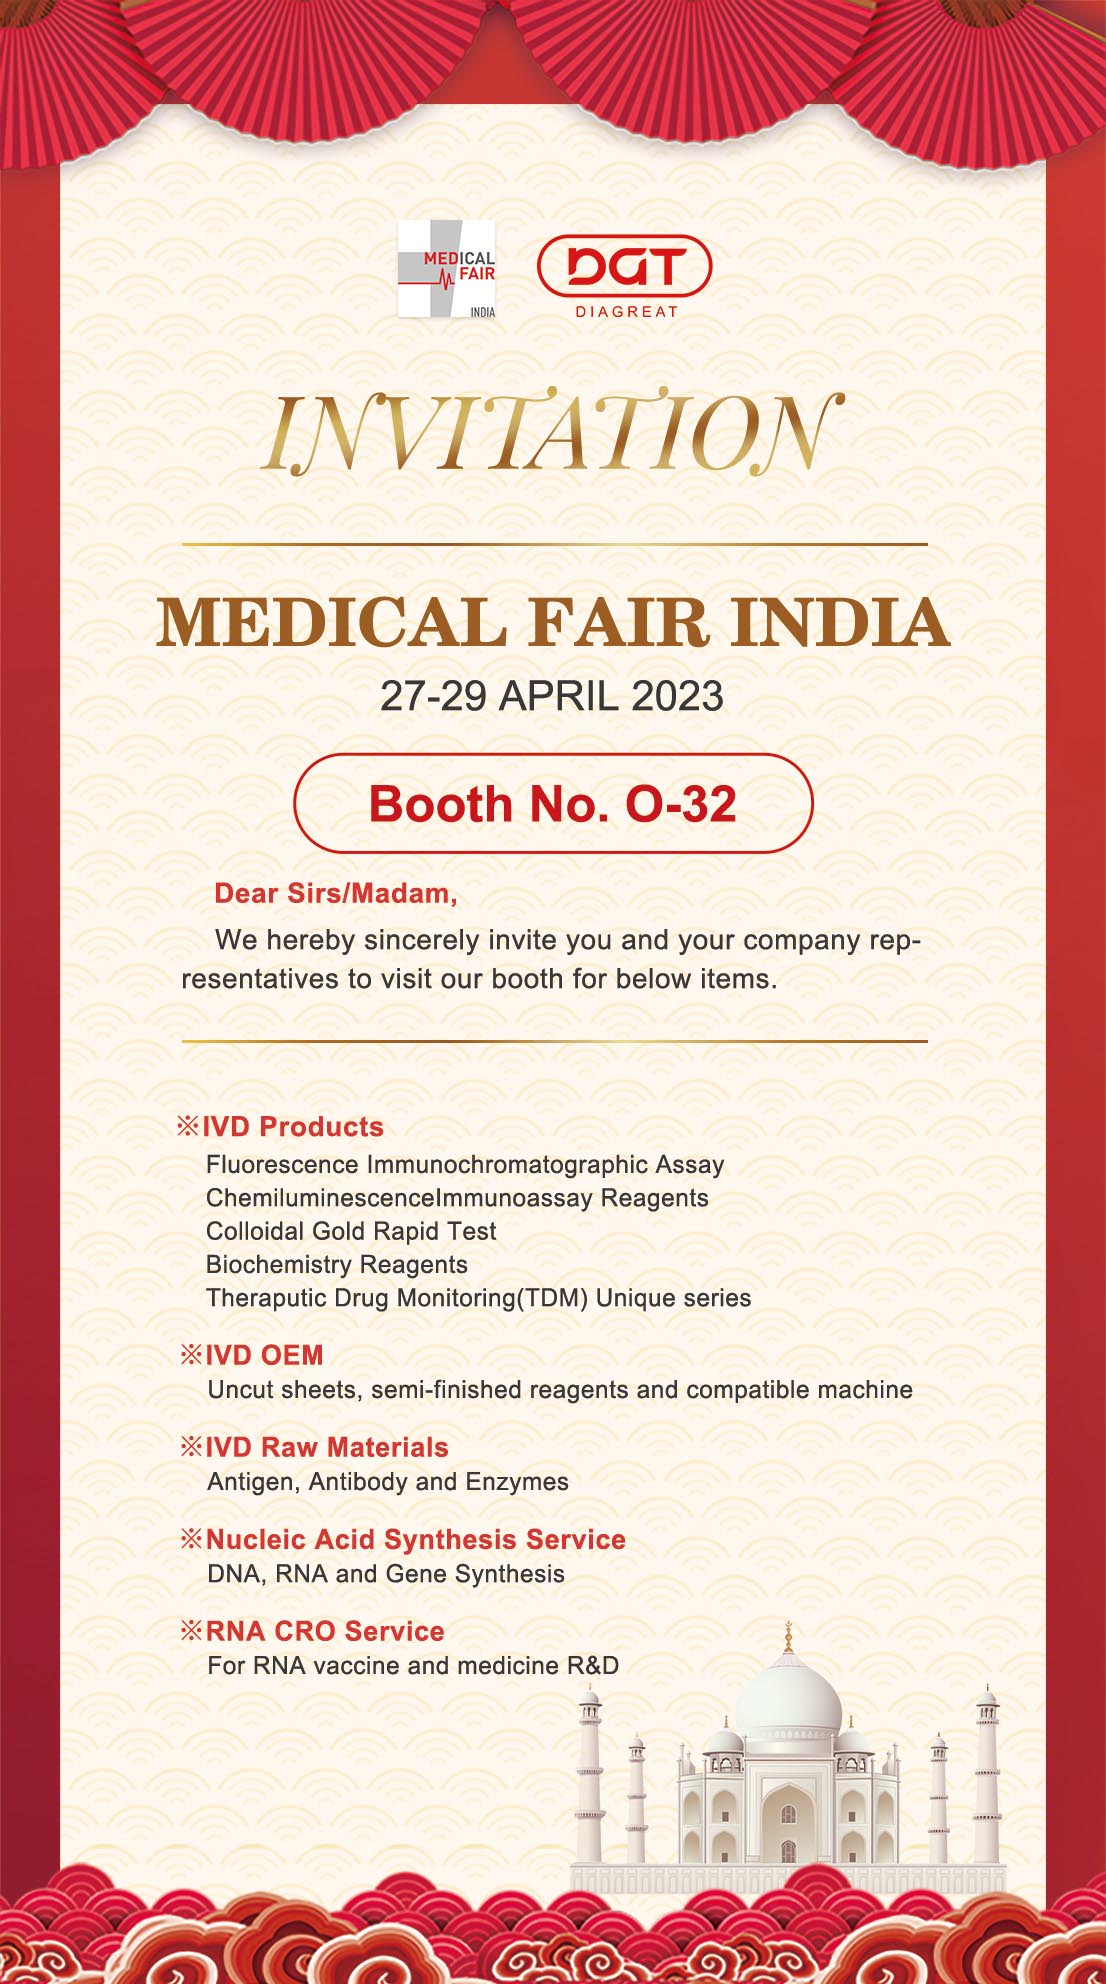 INVITATION | MEDICAL FAIR INDIA 27-29 APRIL 2023 Booth No.0-32